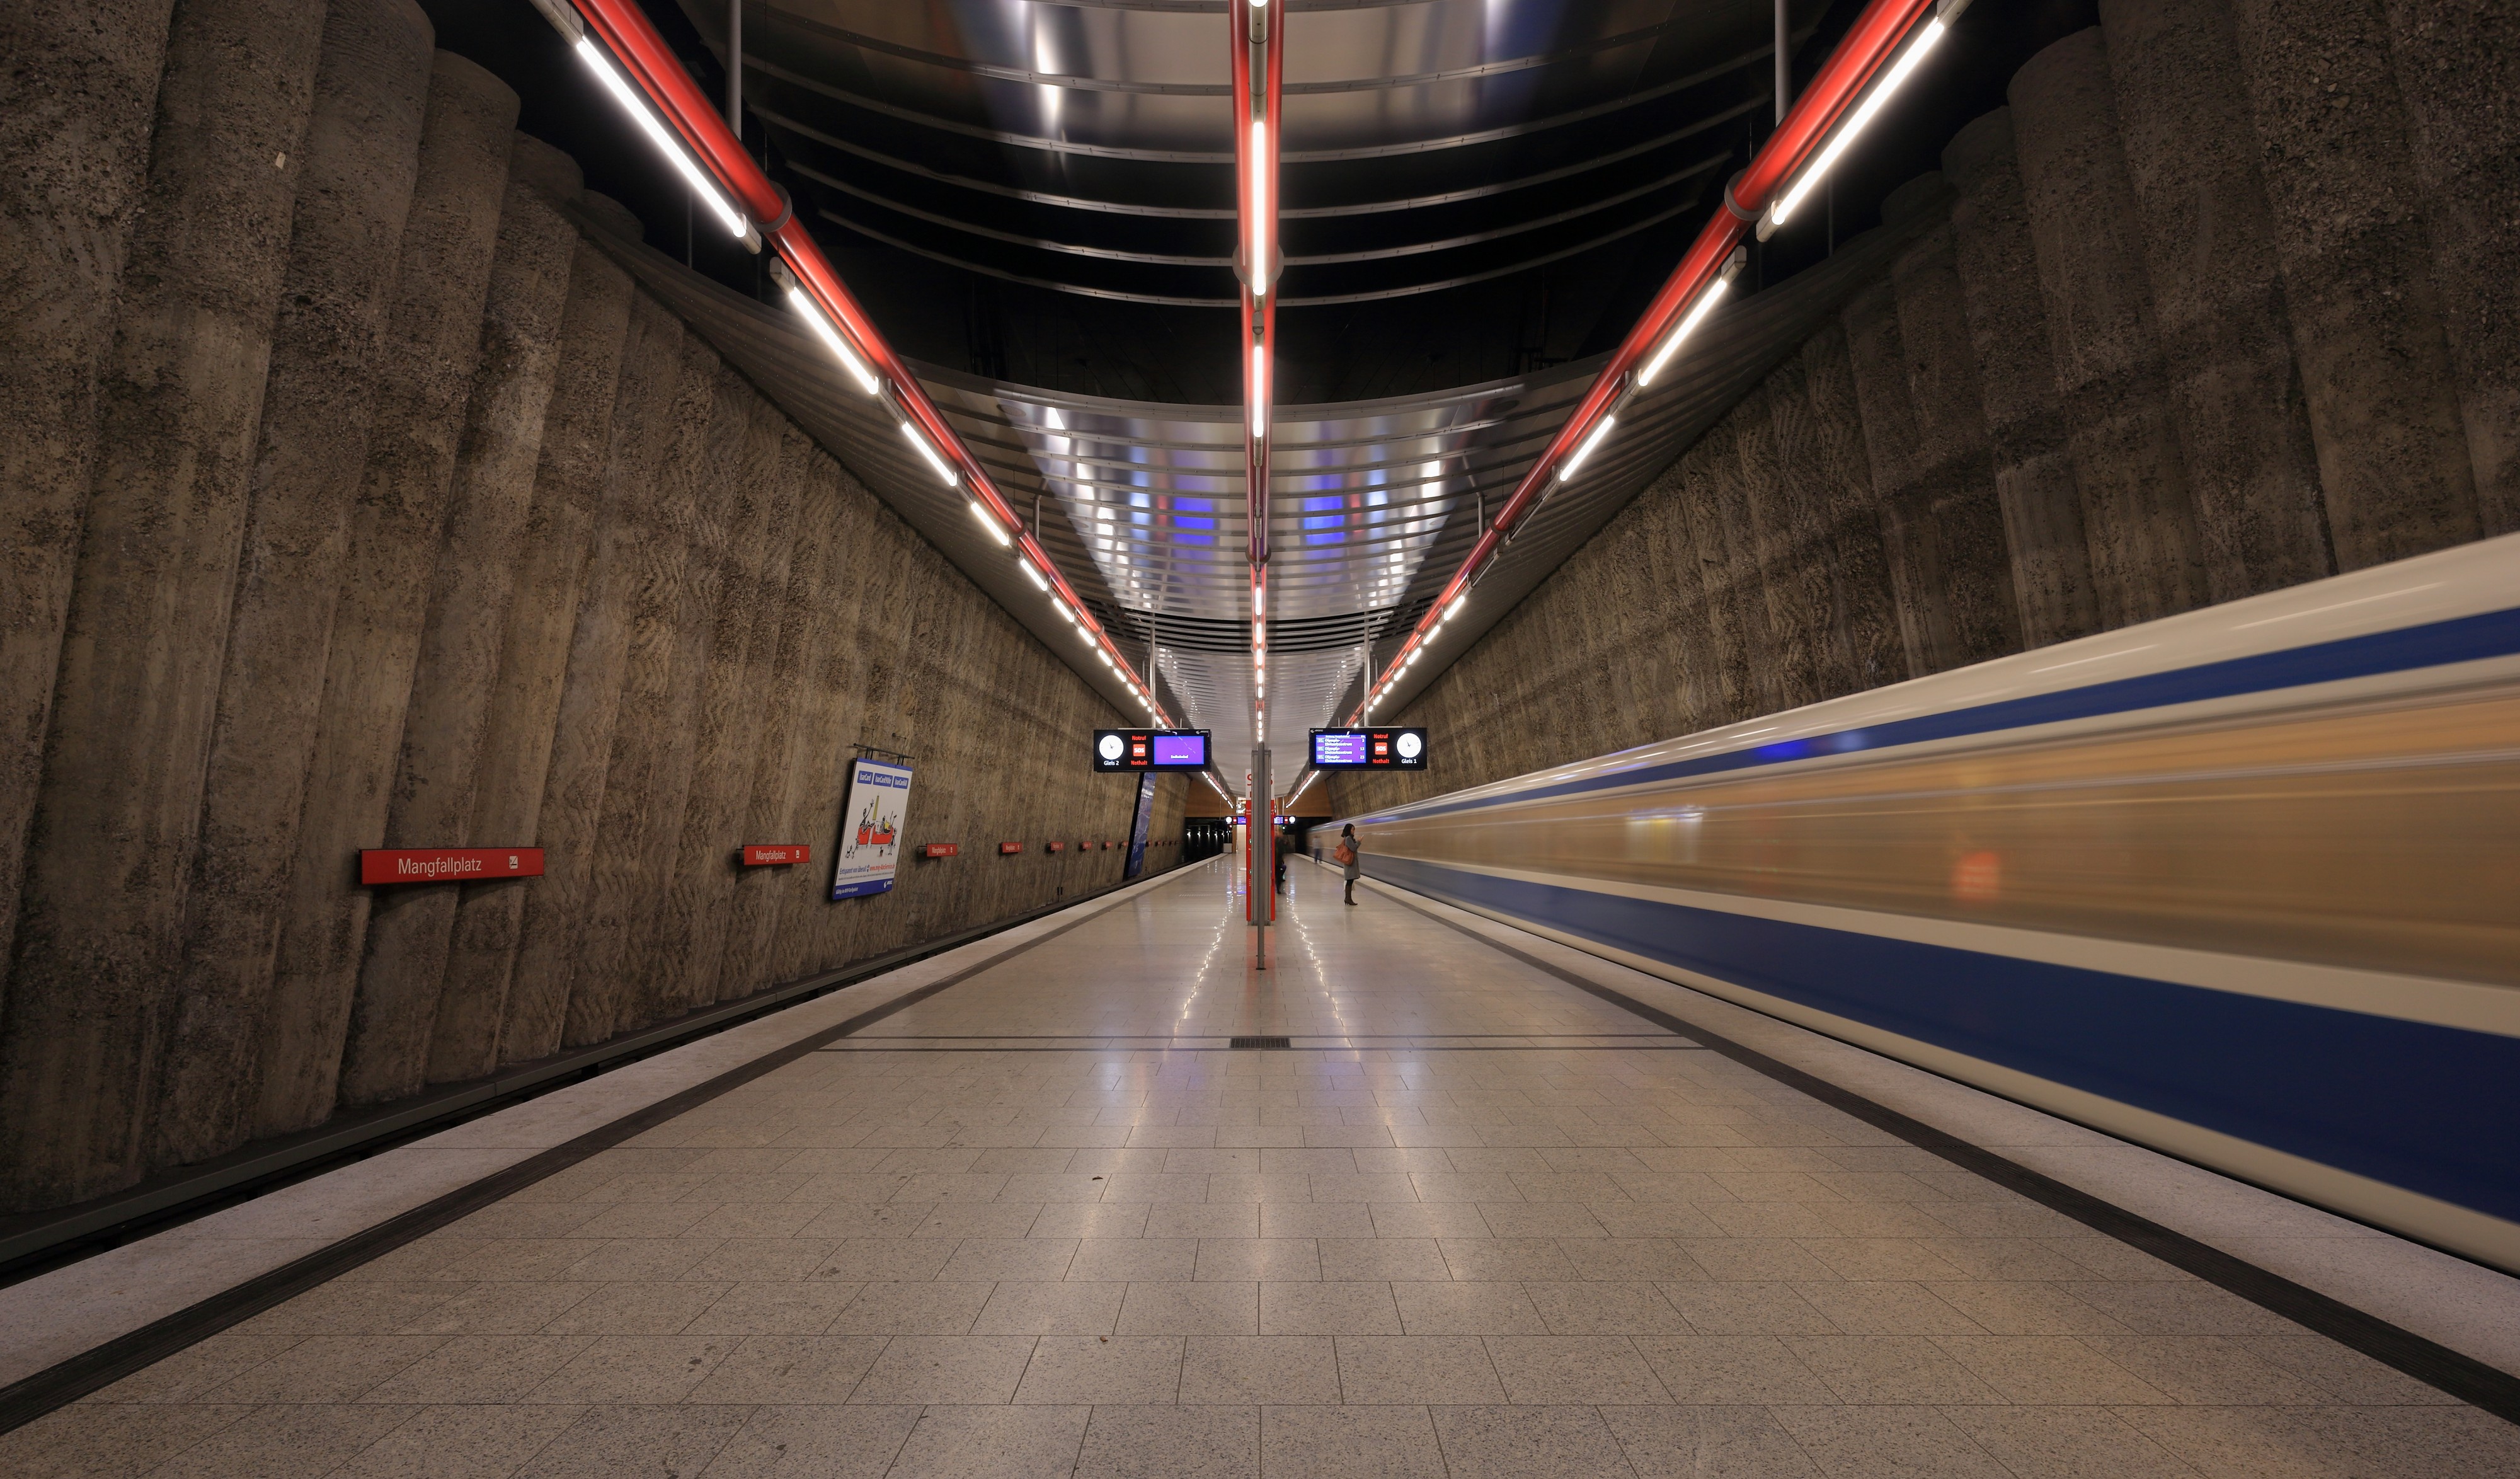 Munich subway station Mangfallplatz